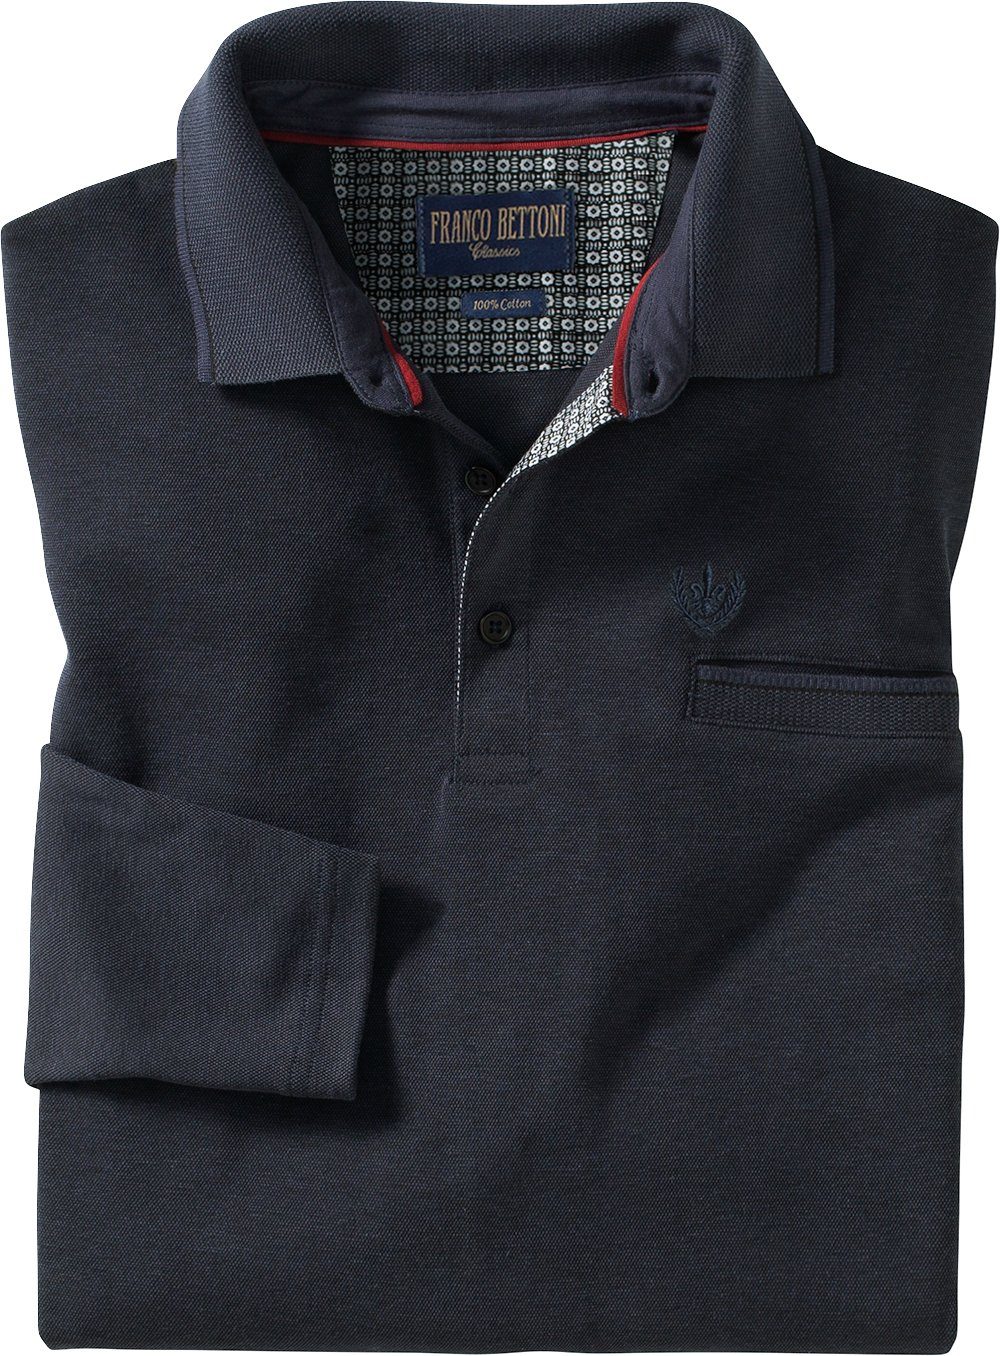 Franco Bettoni Langarm-Poloshirt kurze dunkelblau Seitenschlitze